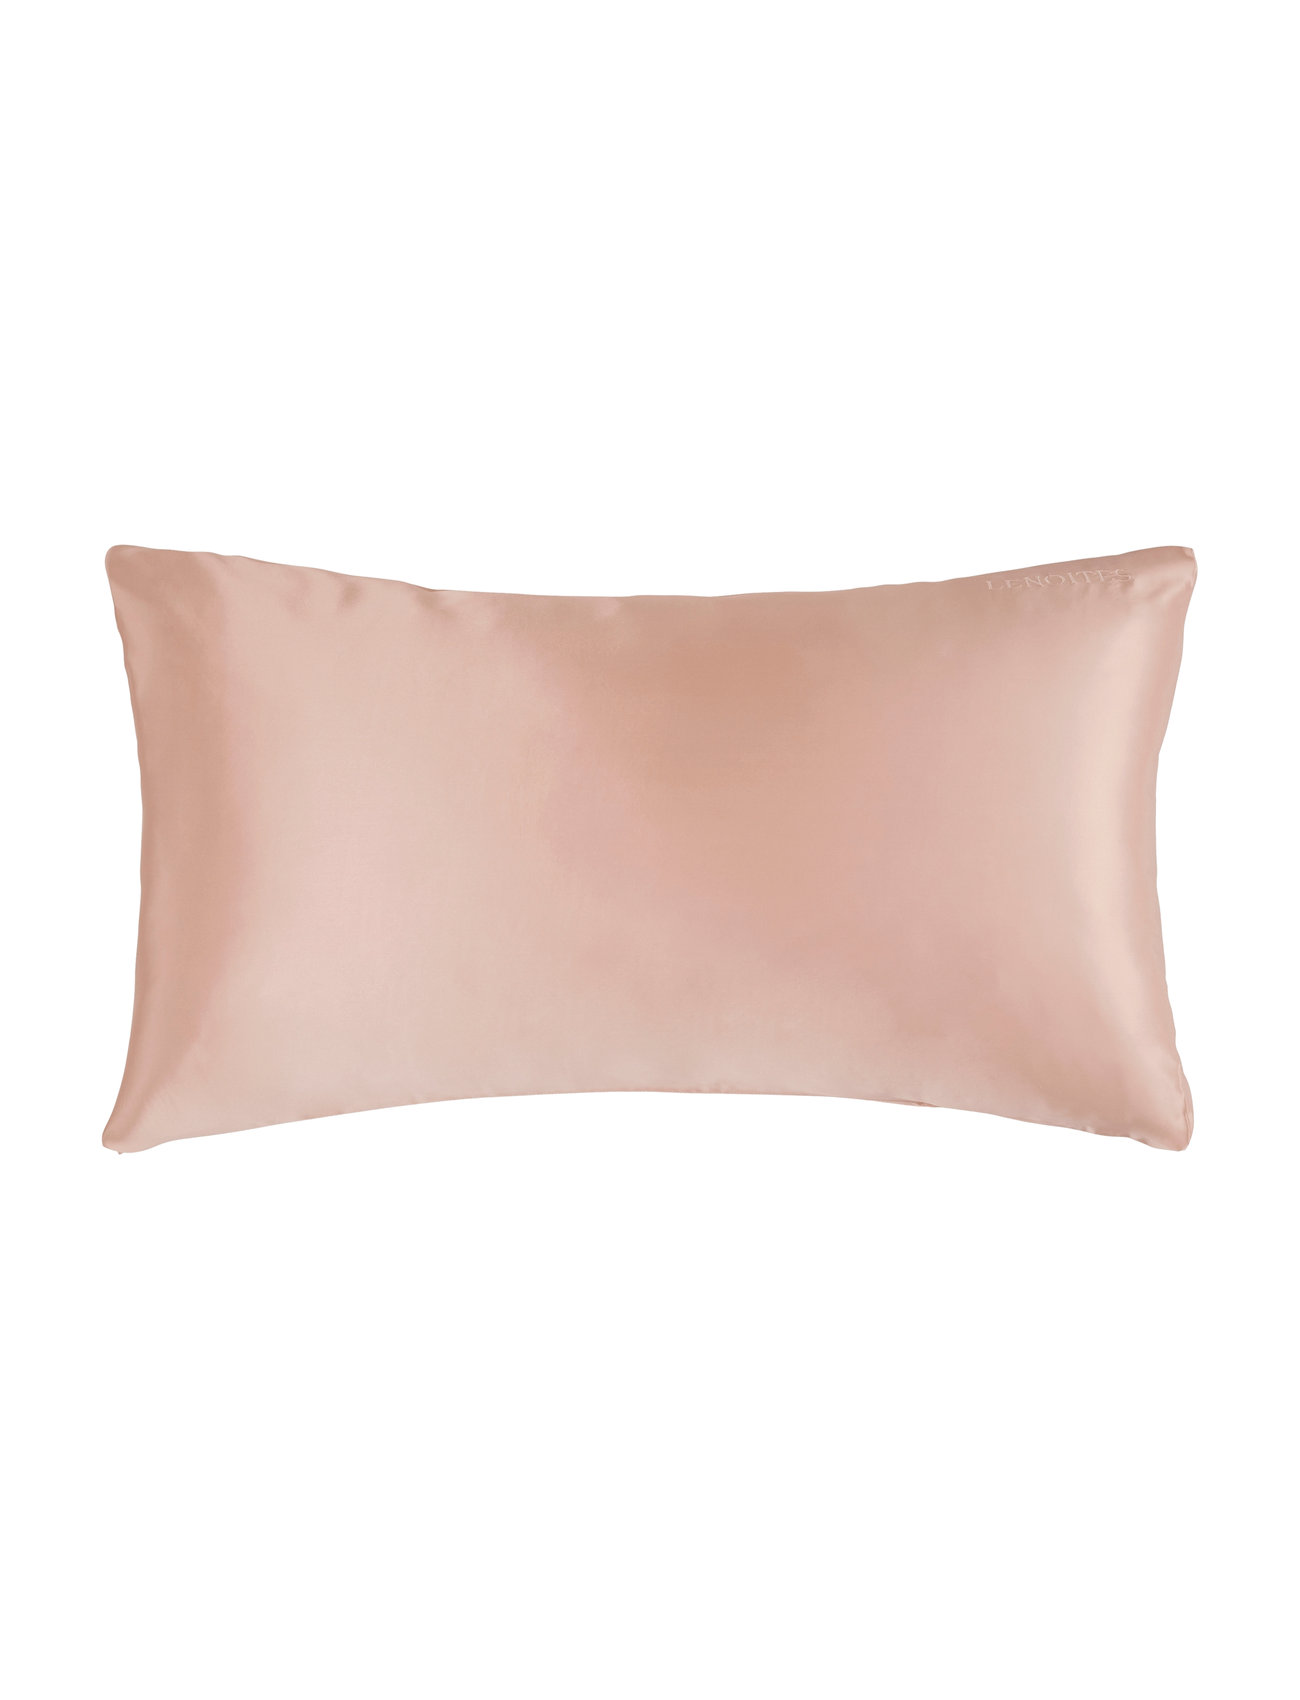 Mulberry Silk Pillowcase Home Textiles Bedtextiles Pillow Cases Pink Lenoites